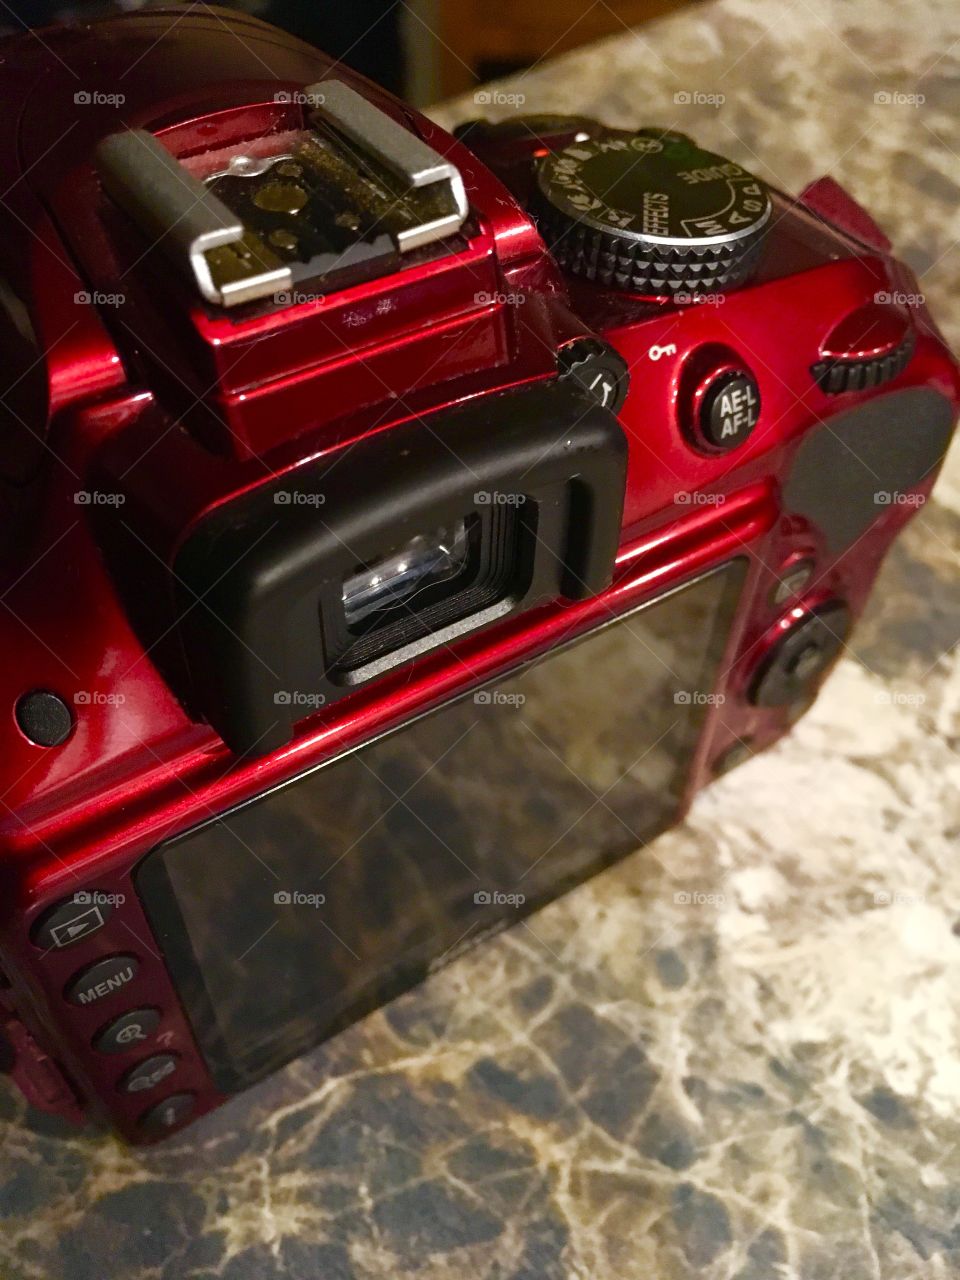 Nikon camera, red. Close up view. Nikon D3300